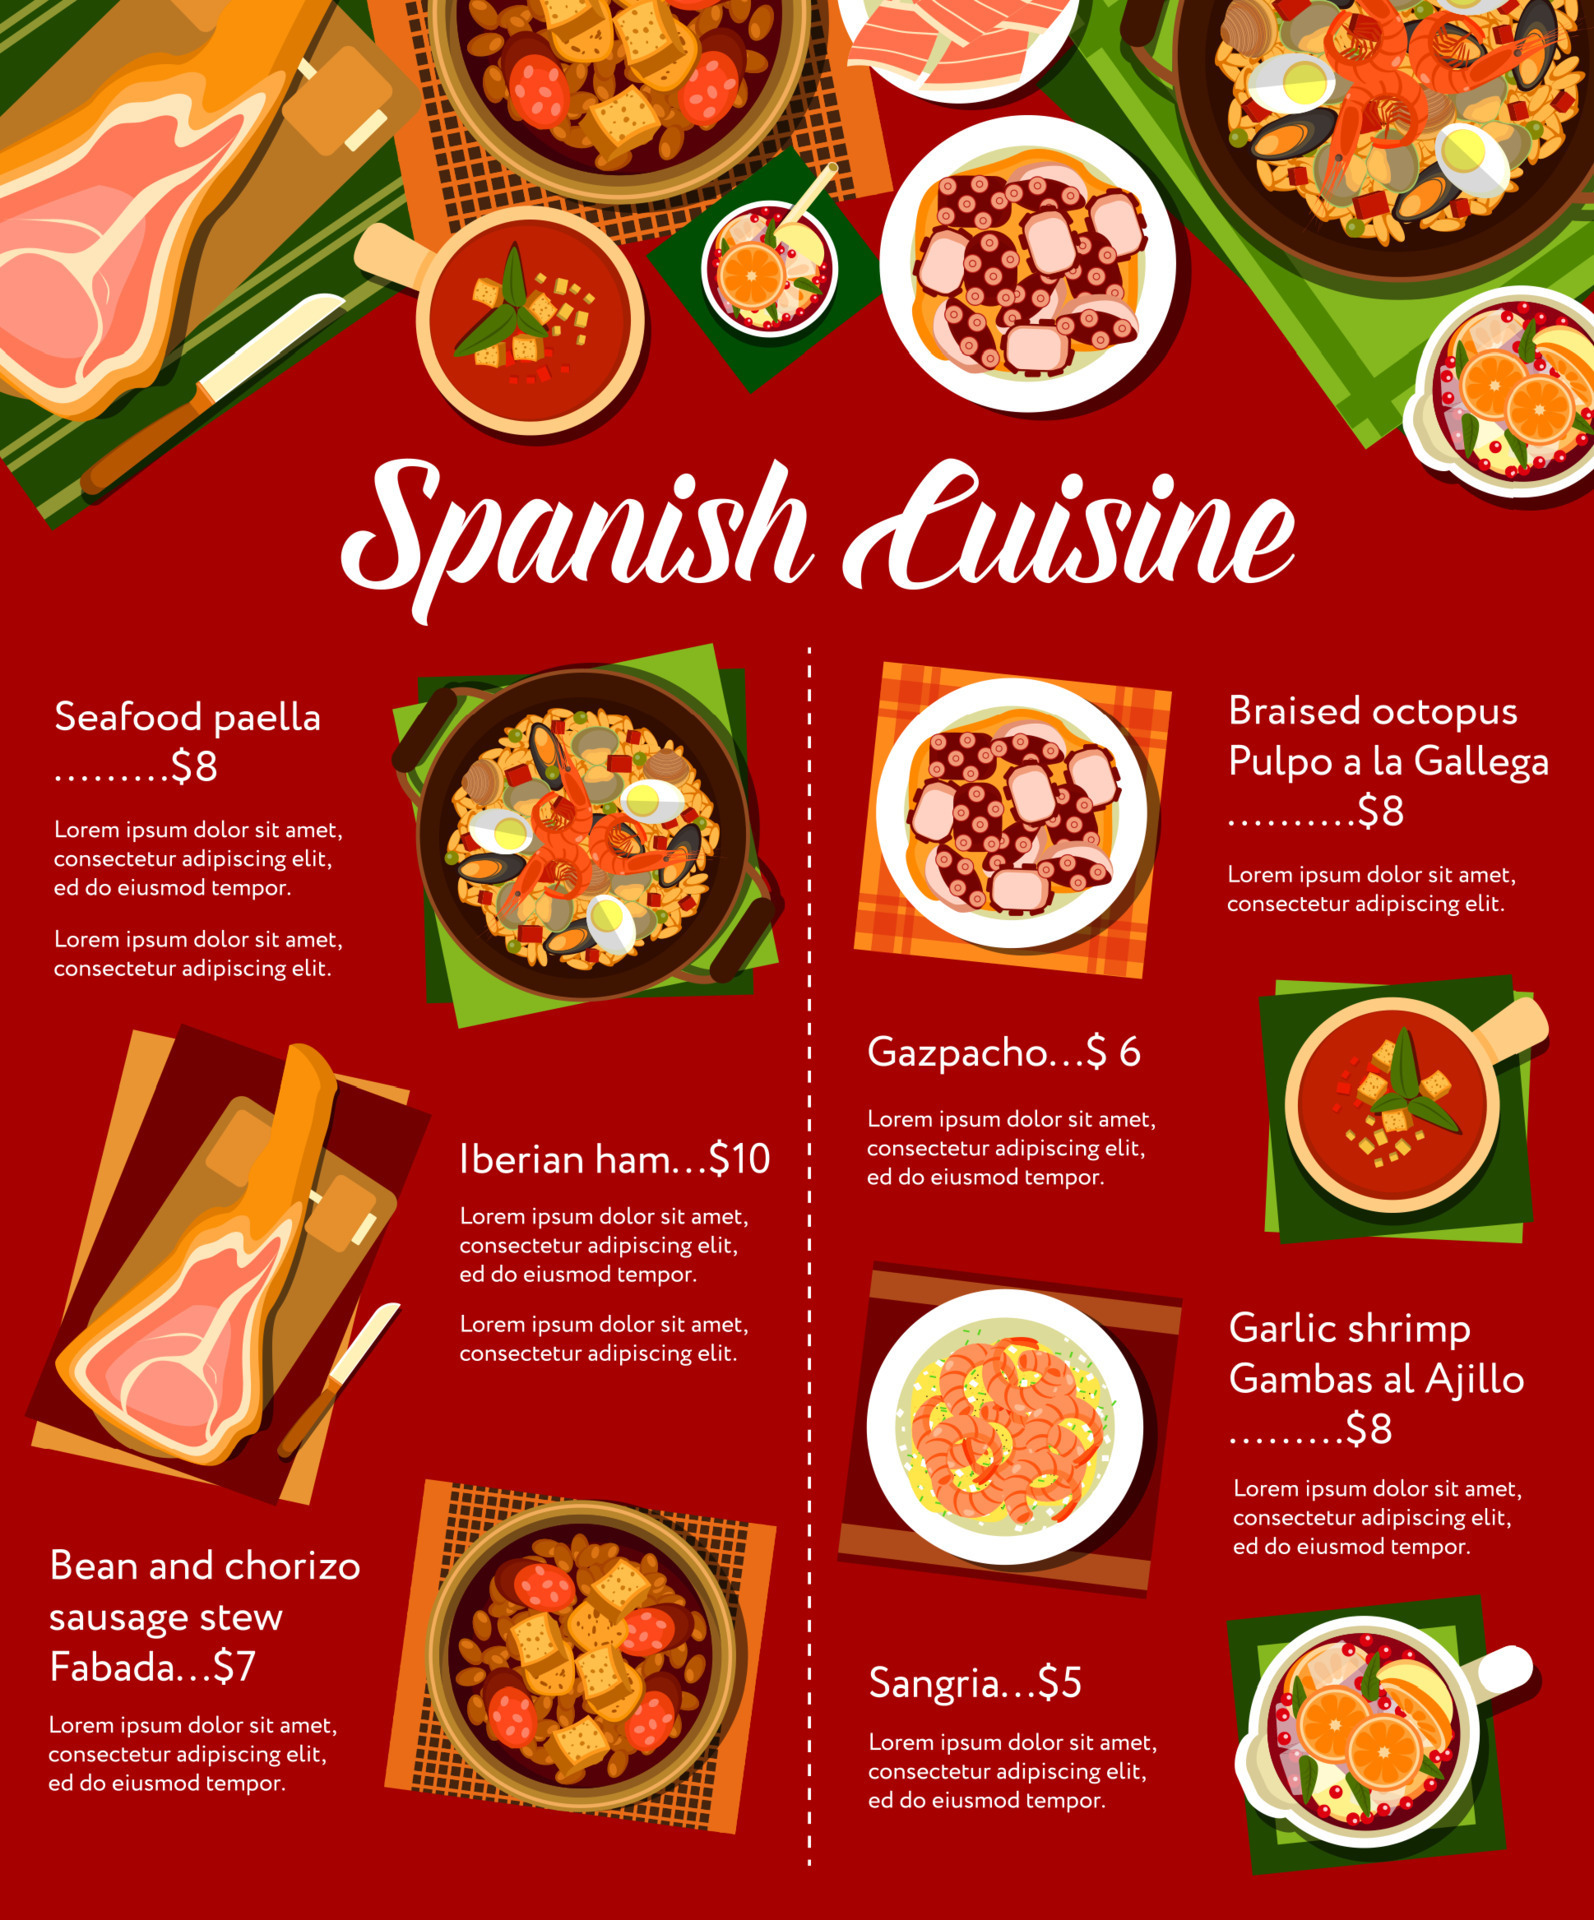 spanish menu assignment